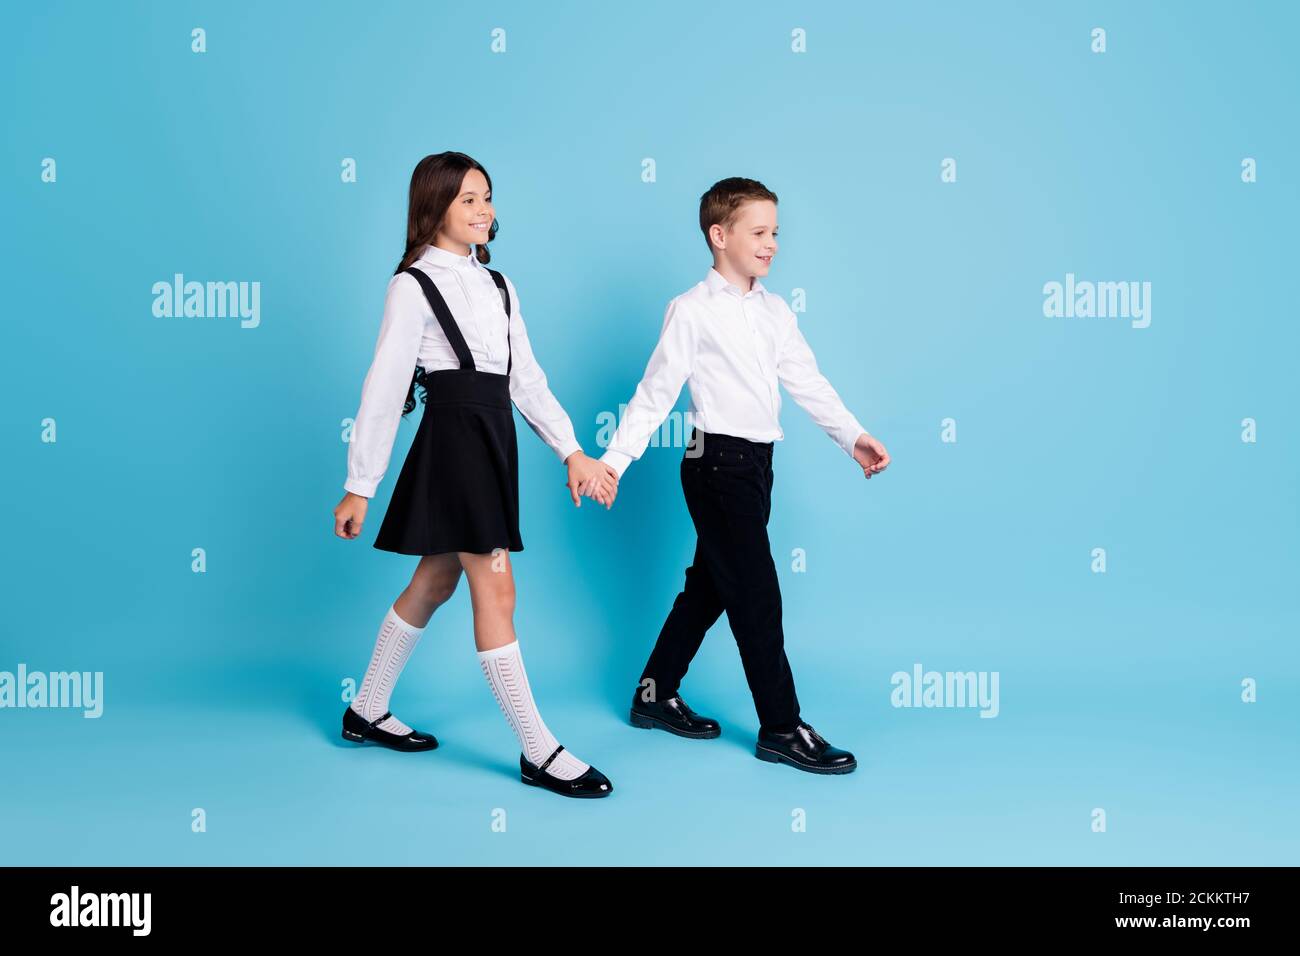 Full length profile photo of two girl boy classmates schoolchildren smiling hold hands morning walk to school wear uniform white shirt black pants Stock Photo